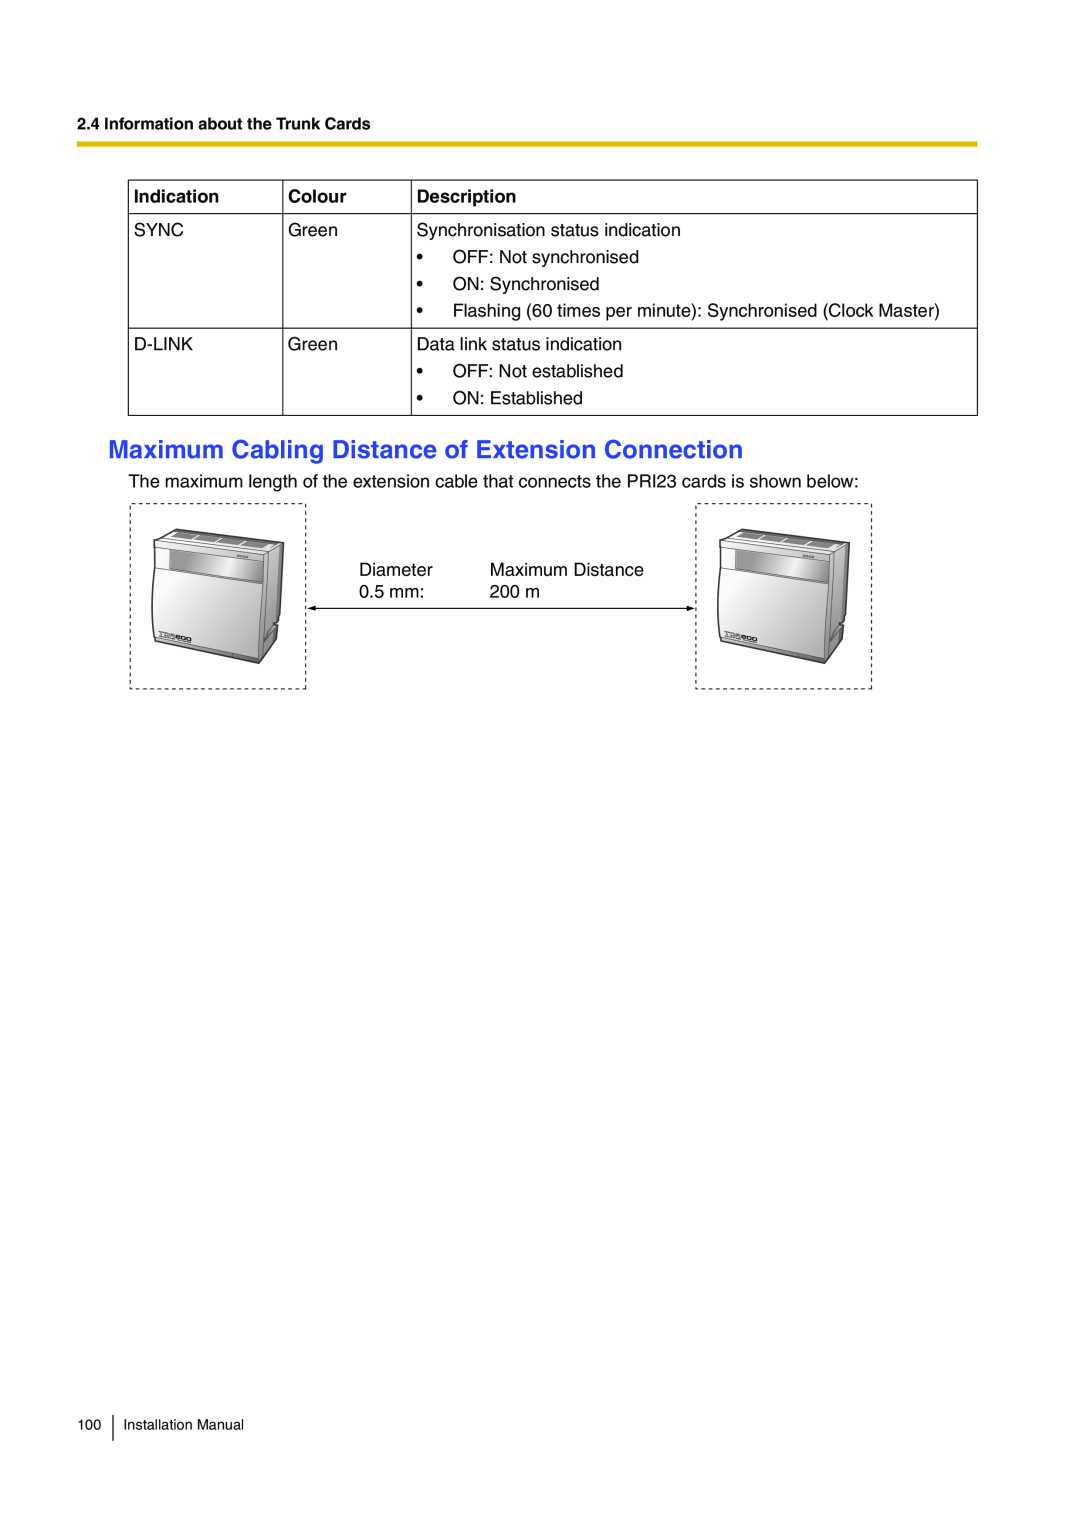 Panasonic KX-TDA100 Maximum Cabling Distance of Extension Connection, Indication, Colour, Description, Installation Manual 